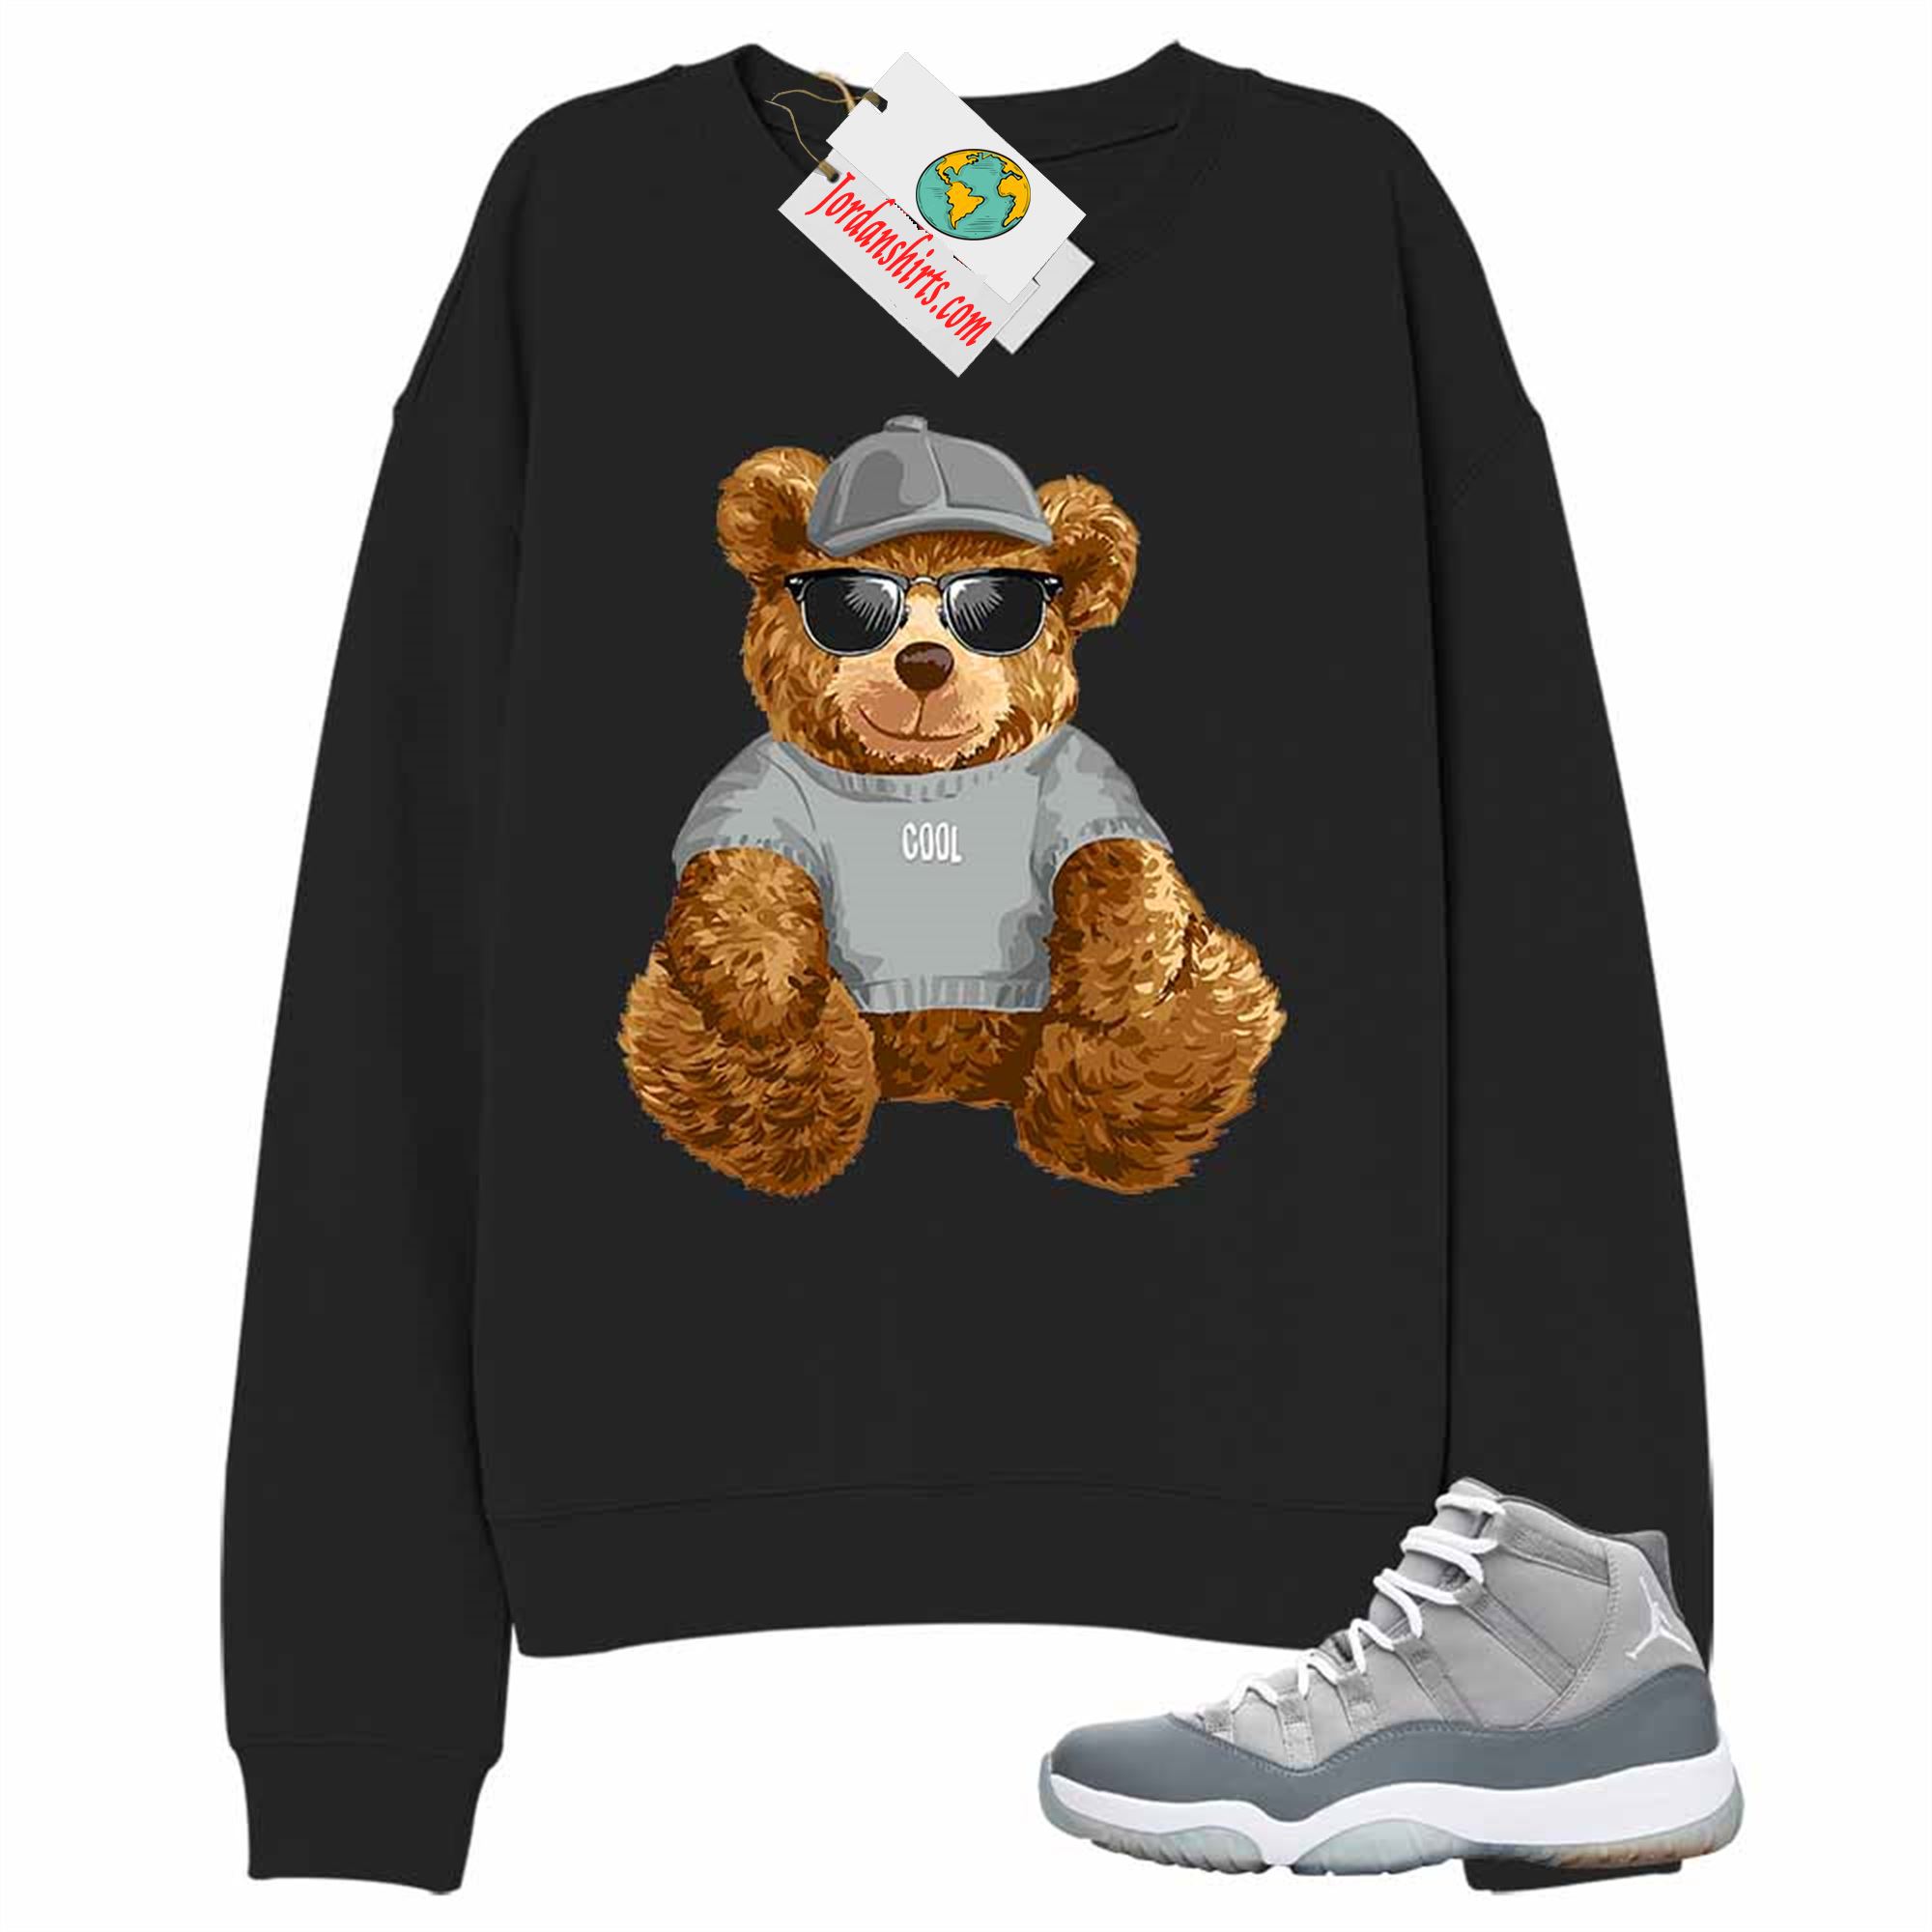 Jordan 11 Sweatshirt, Teddy Bear With Sunglasses _ Hat Black Sweatshirt Air Jordan 11 Cool Grey 11s Size Up To 5xl